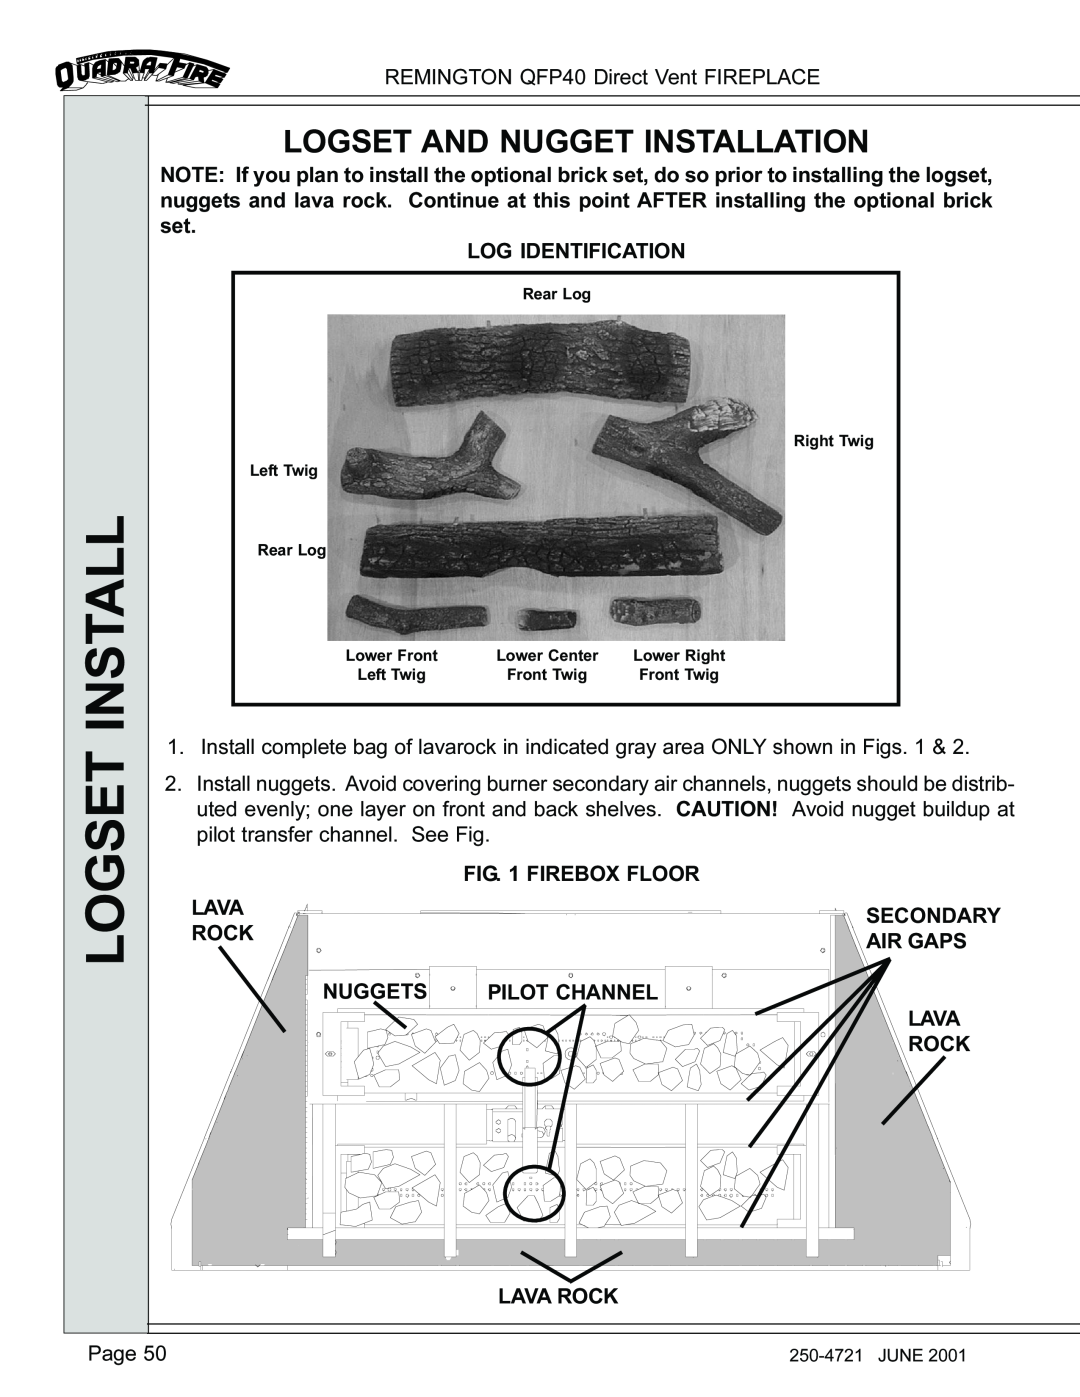 Remington QFP40 manual Logset Install, Logset And Nugget Installation 